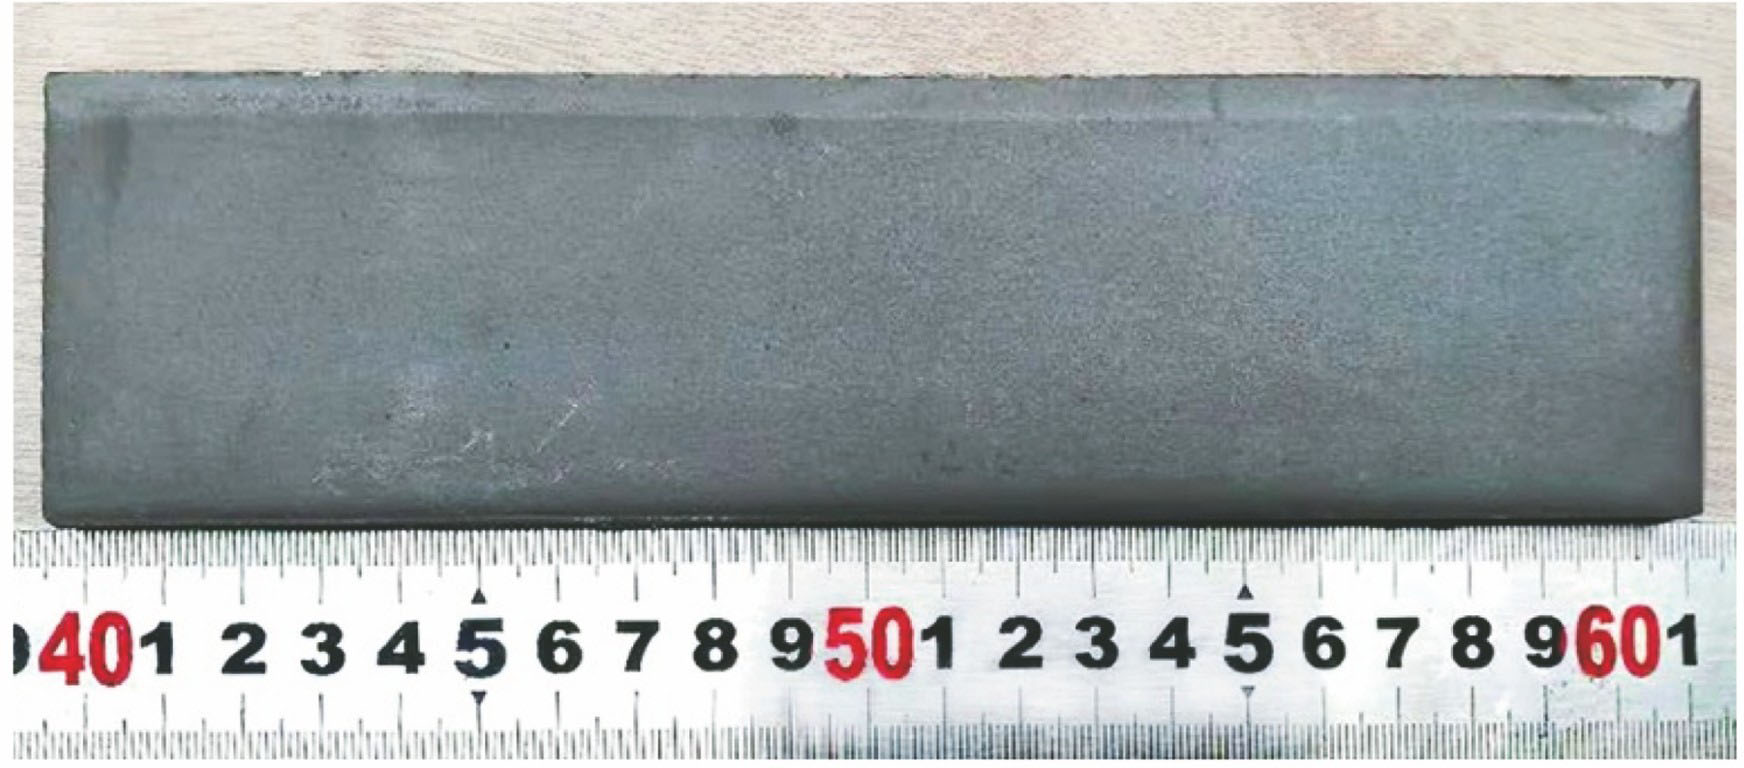 Titanium rolled plate sample